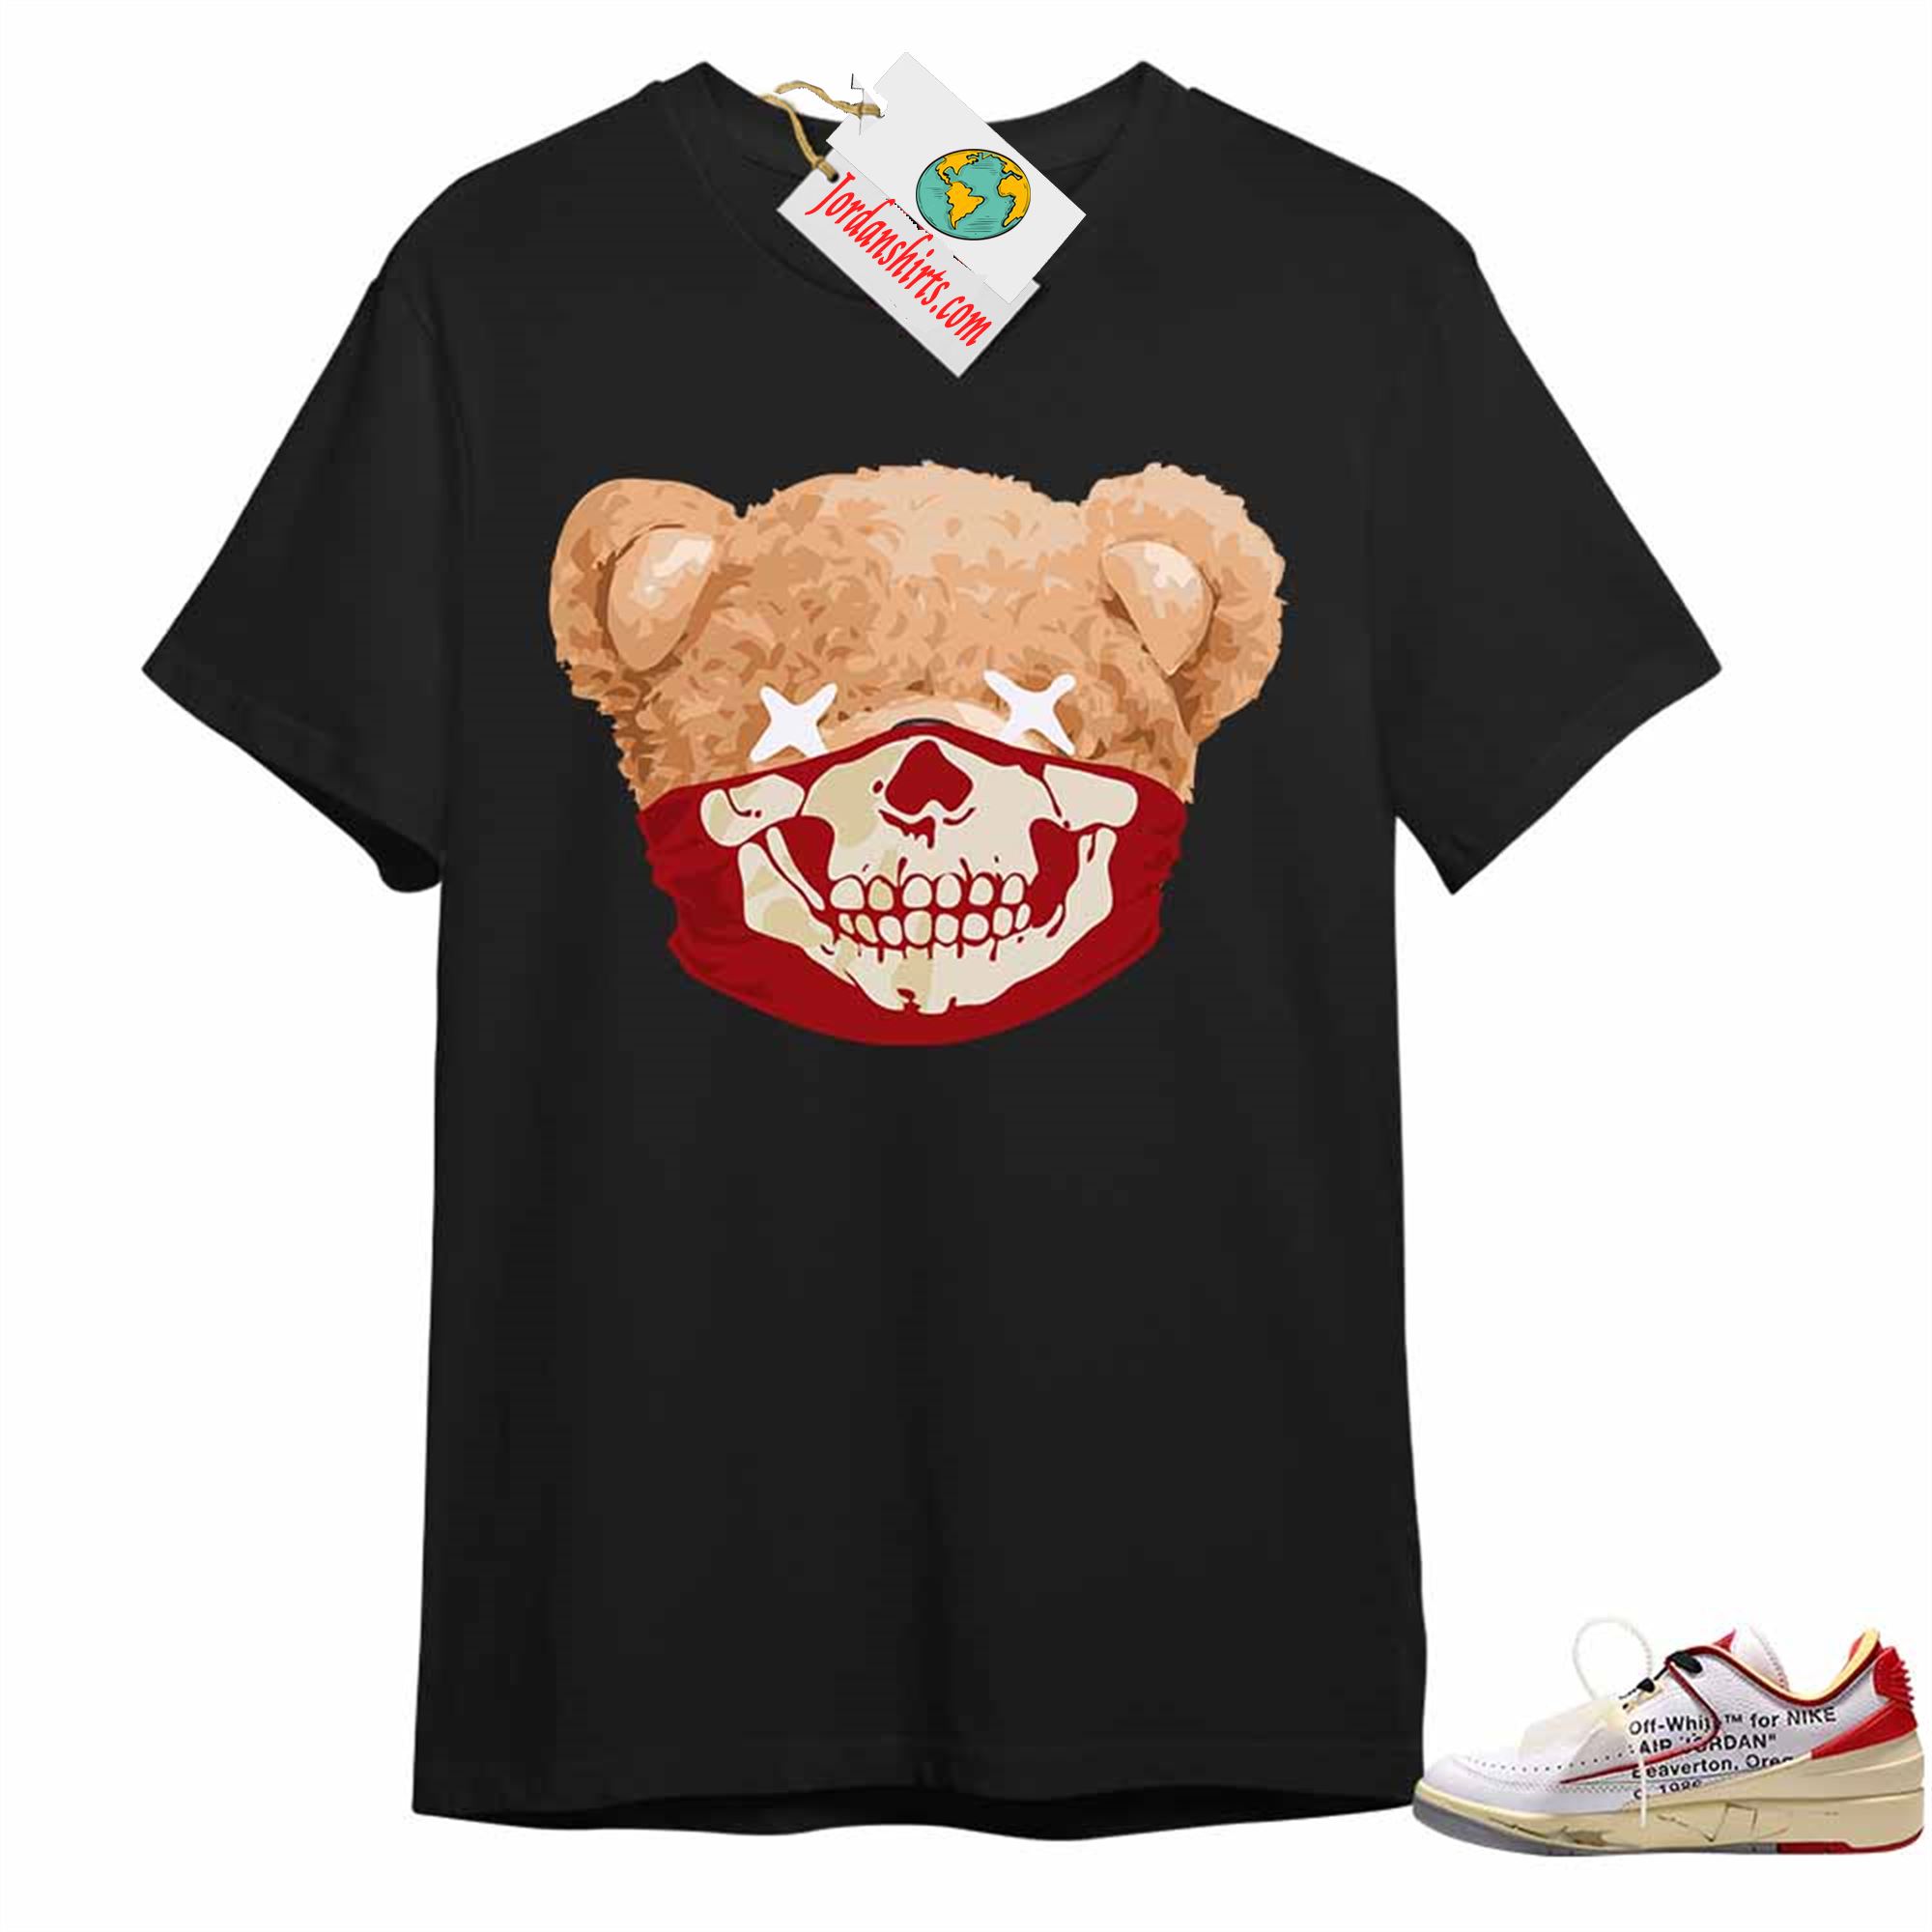 Jordan 2 Shirt, Teddy Bear Skull Bandana Black Air Jordan 2 Low White Red Off-white 2s Full Size Up To 5xl